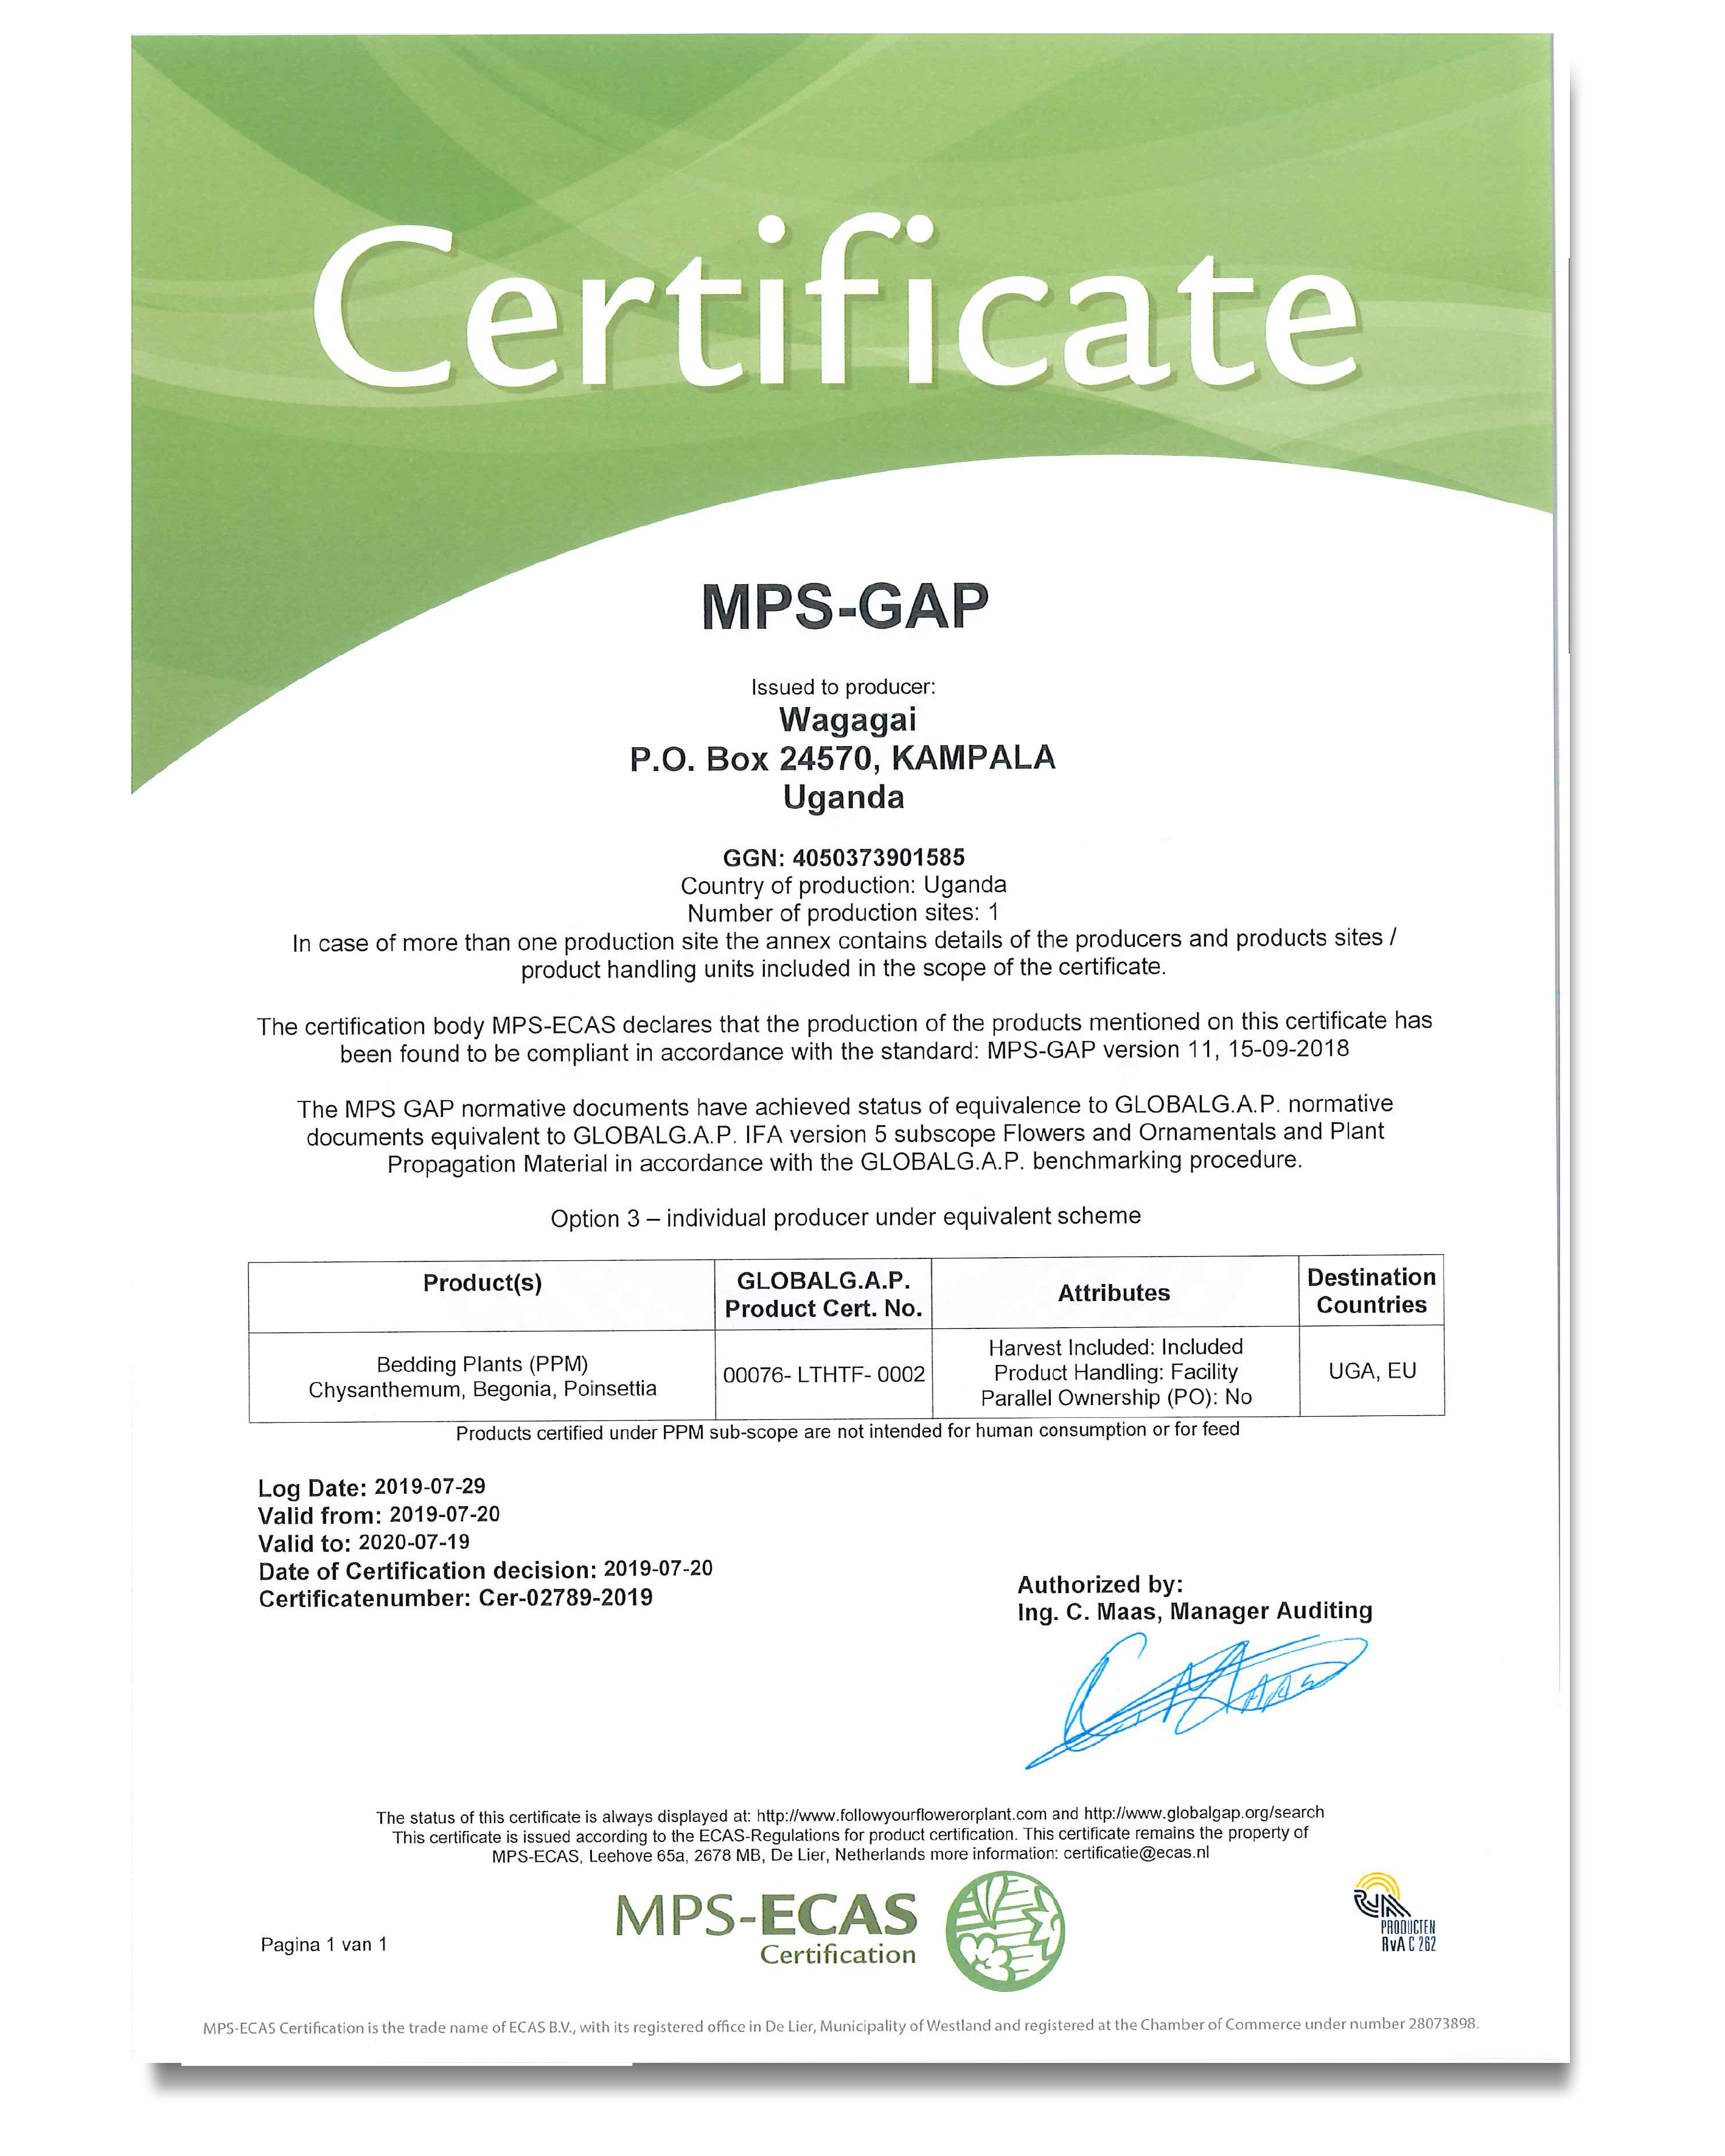 MPS-GAP Wagagai Ltd.